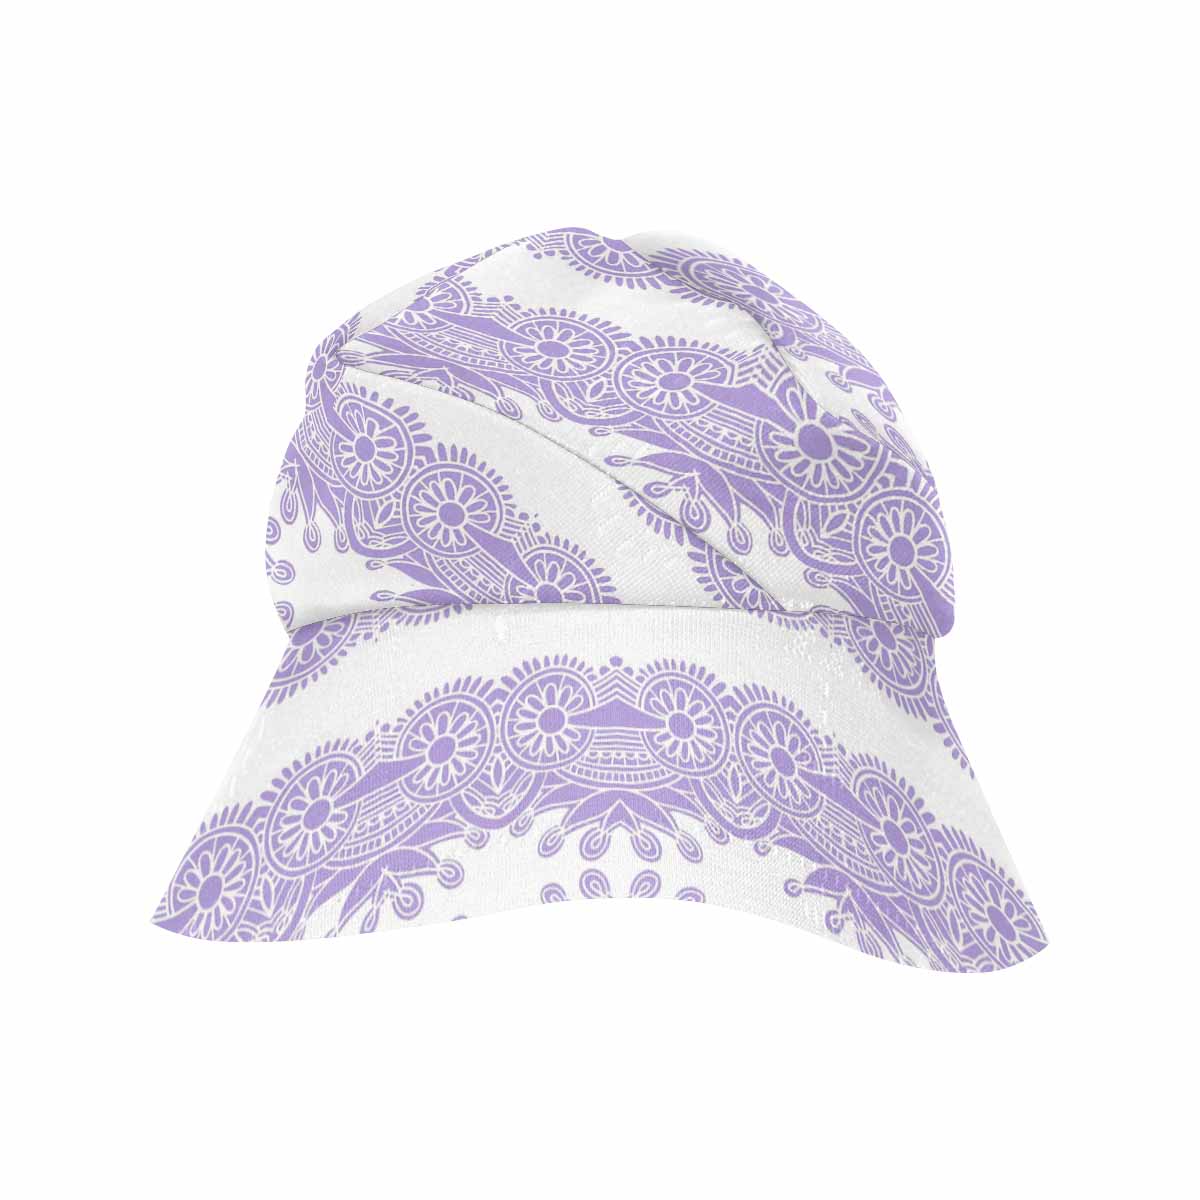 Victorian lace print, wide brim sunvisor Hat, outdoors hat, design 07